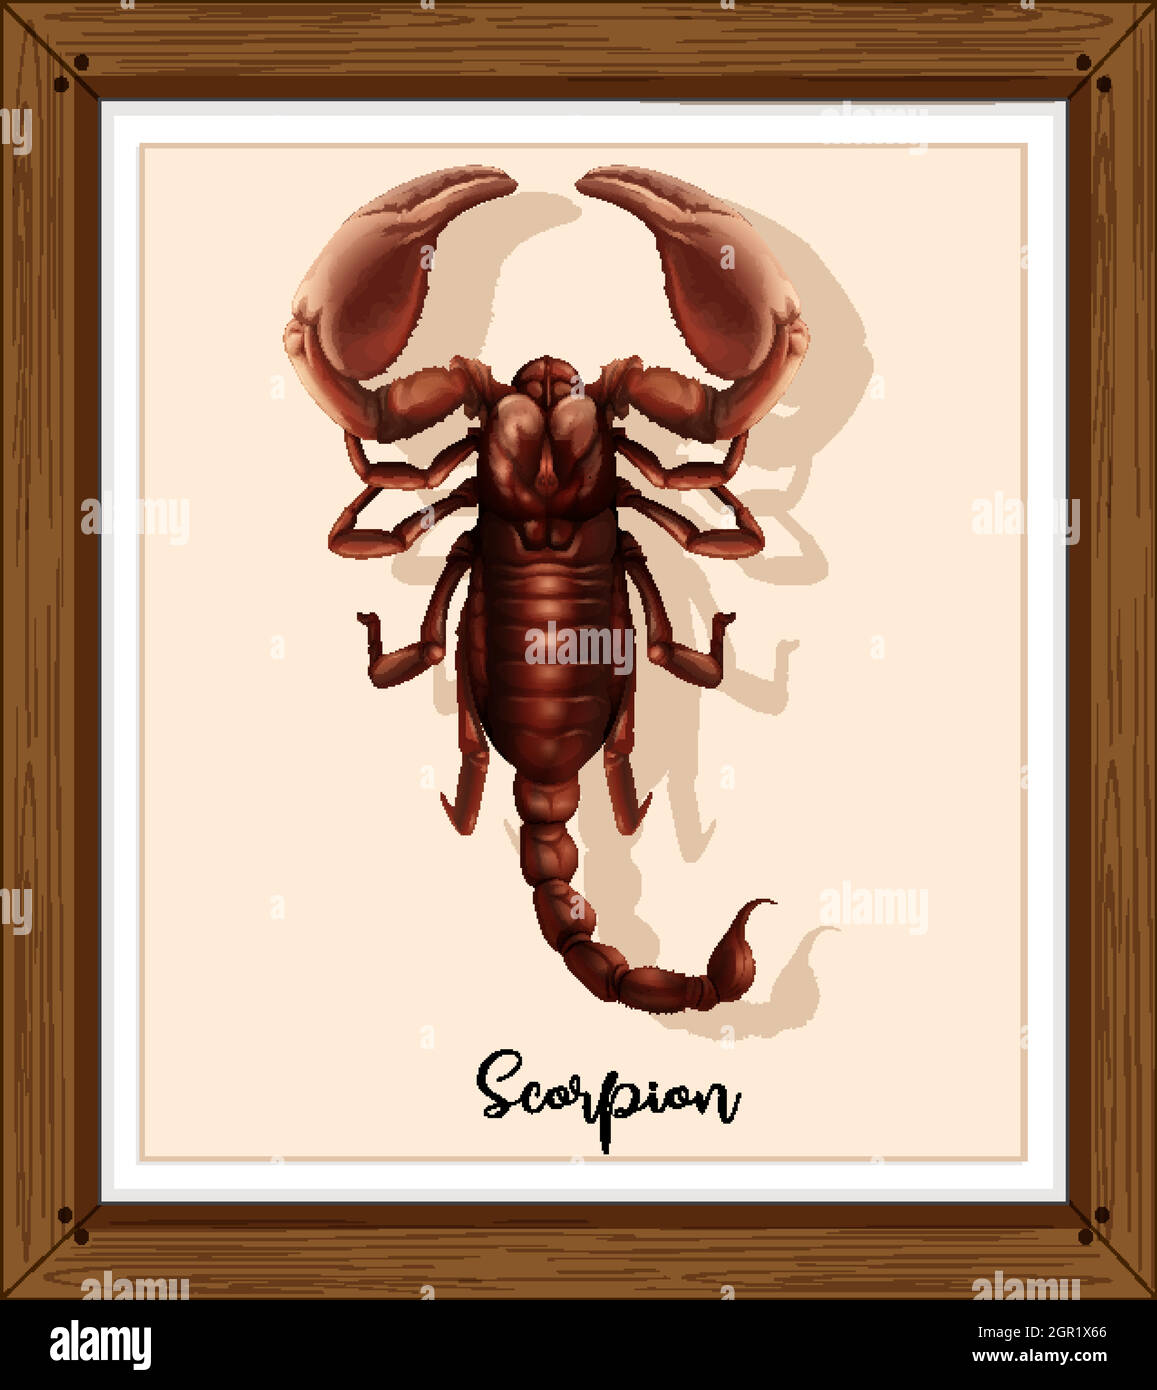 Scorpion on wooden frame Stock Vector